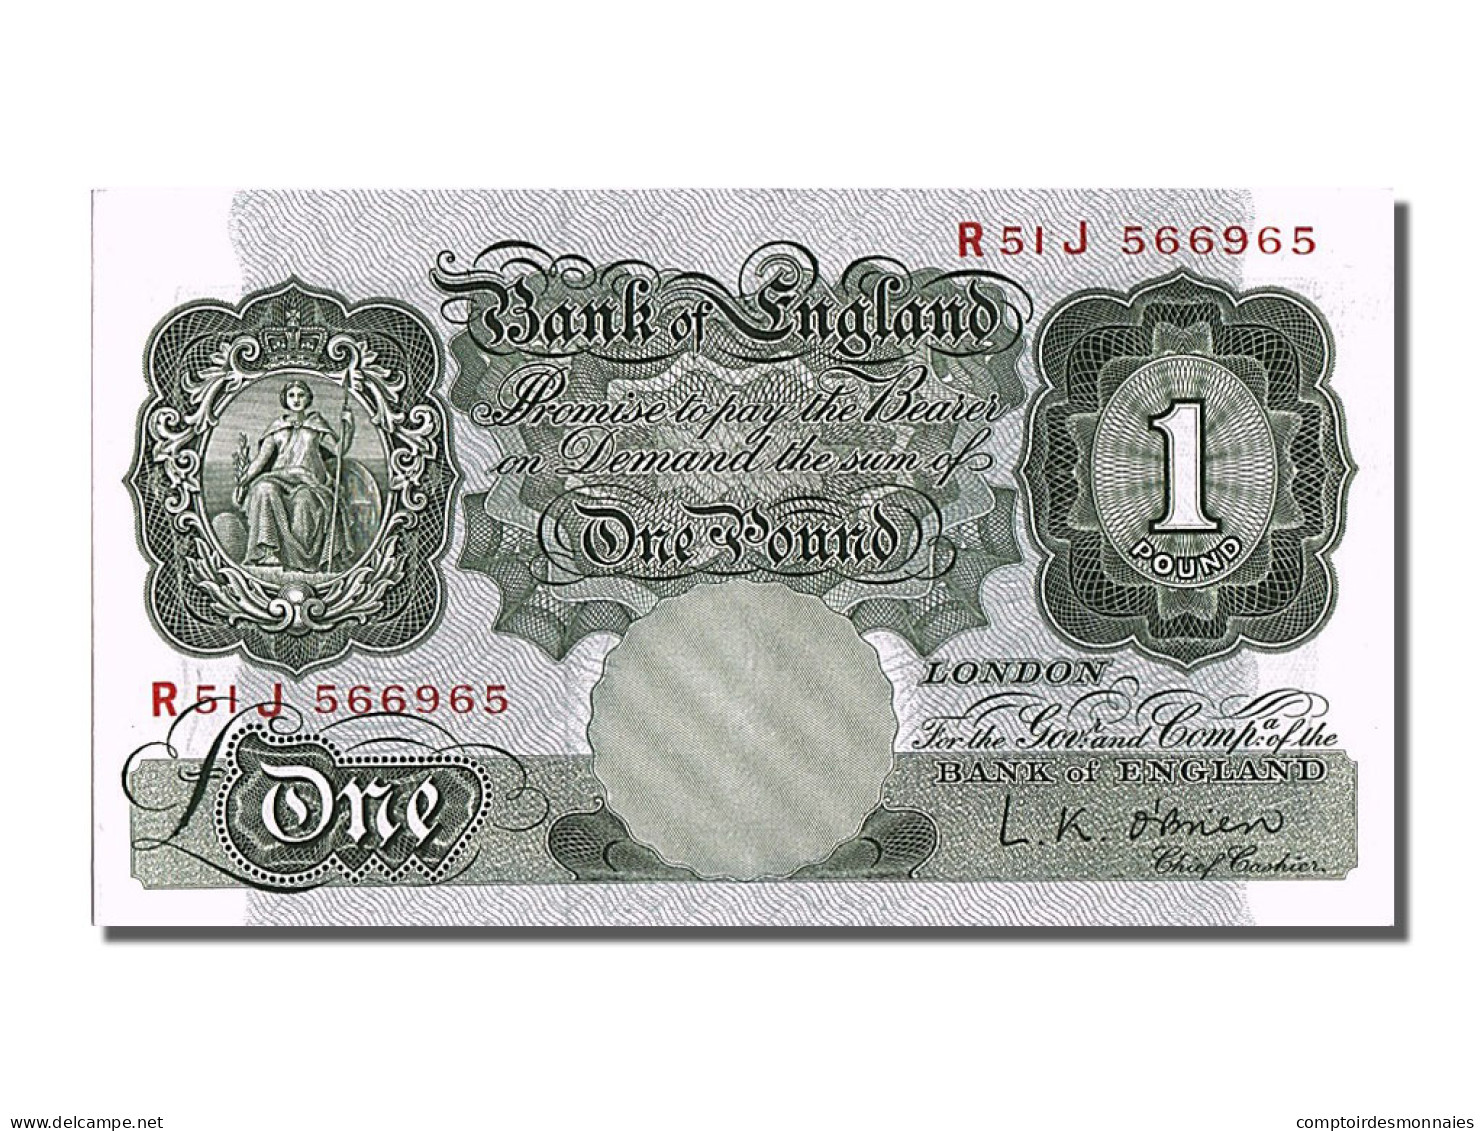 Billet, Grande-Bretagne, 1 Pound, NEUF - 1 Pond